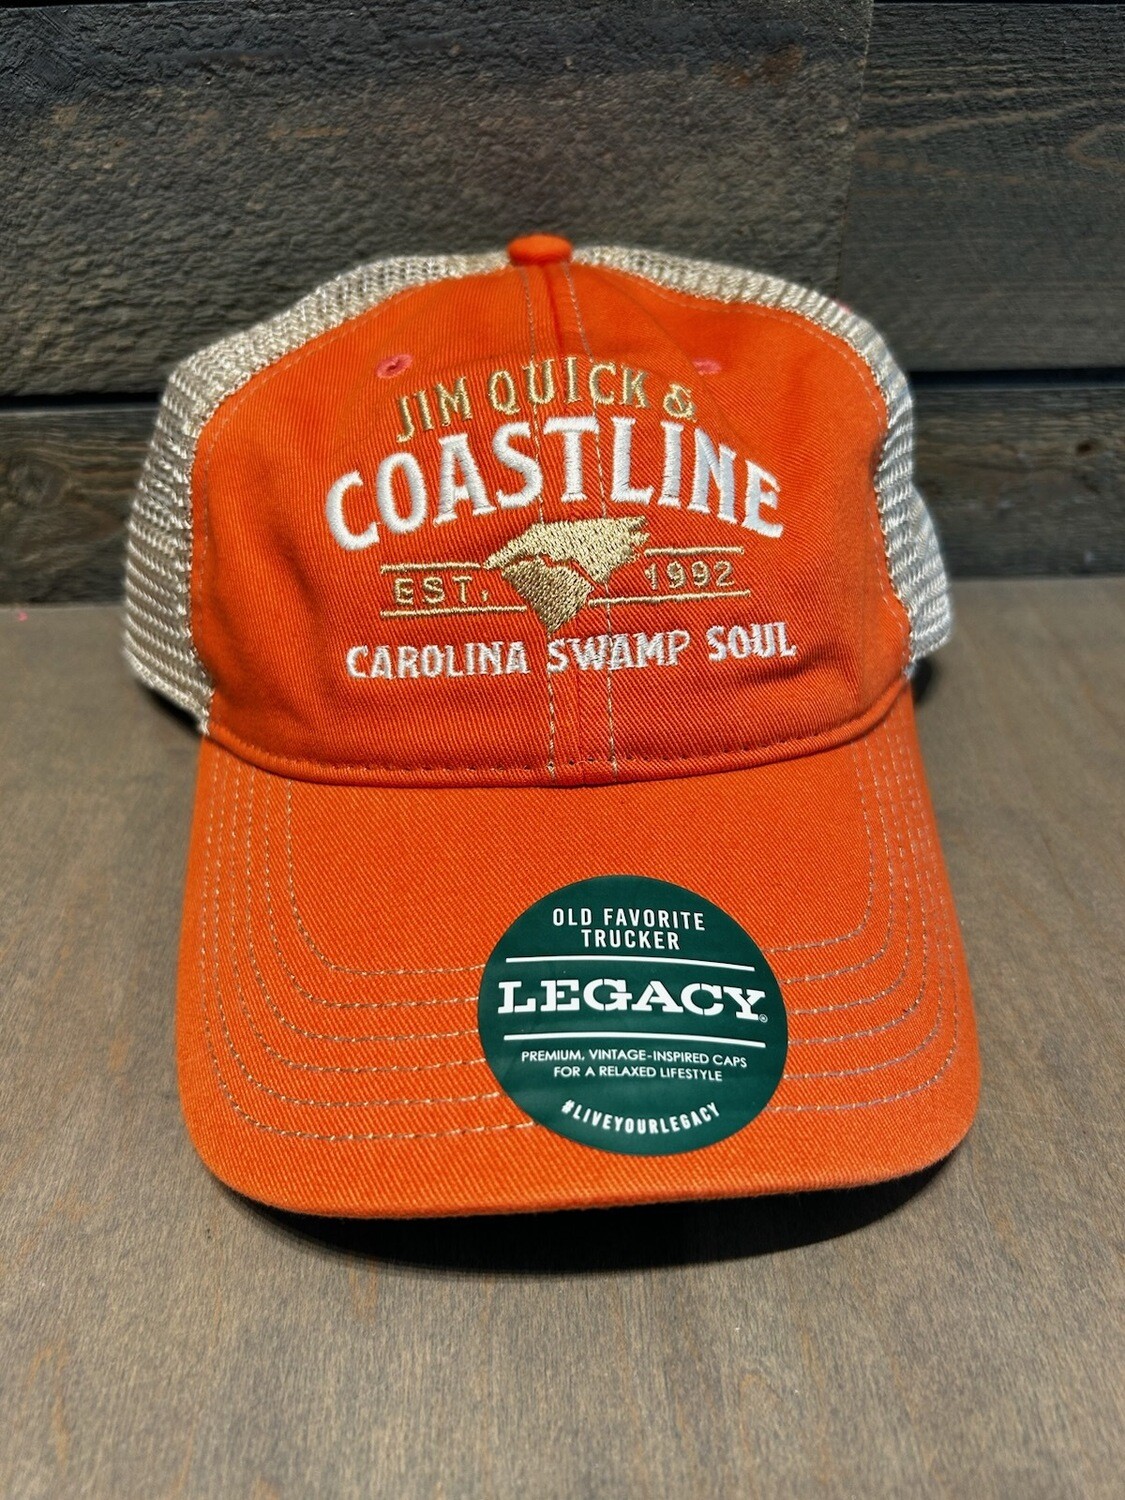 Jim Quick and Coastline Hats